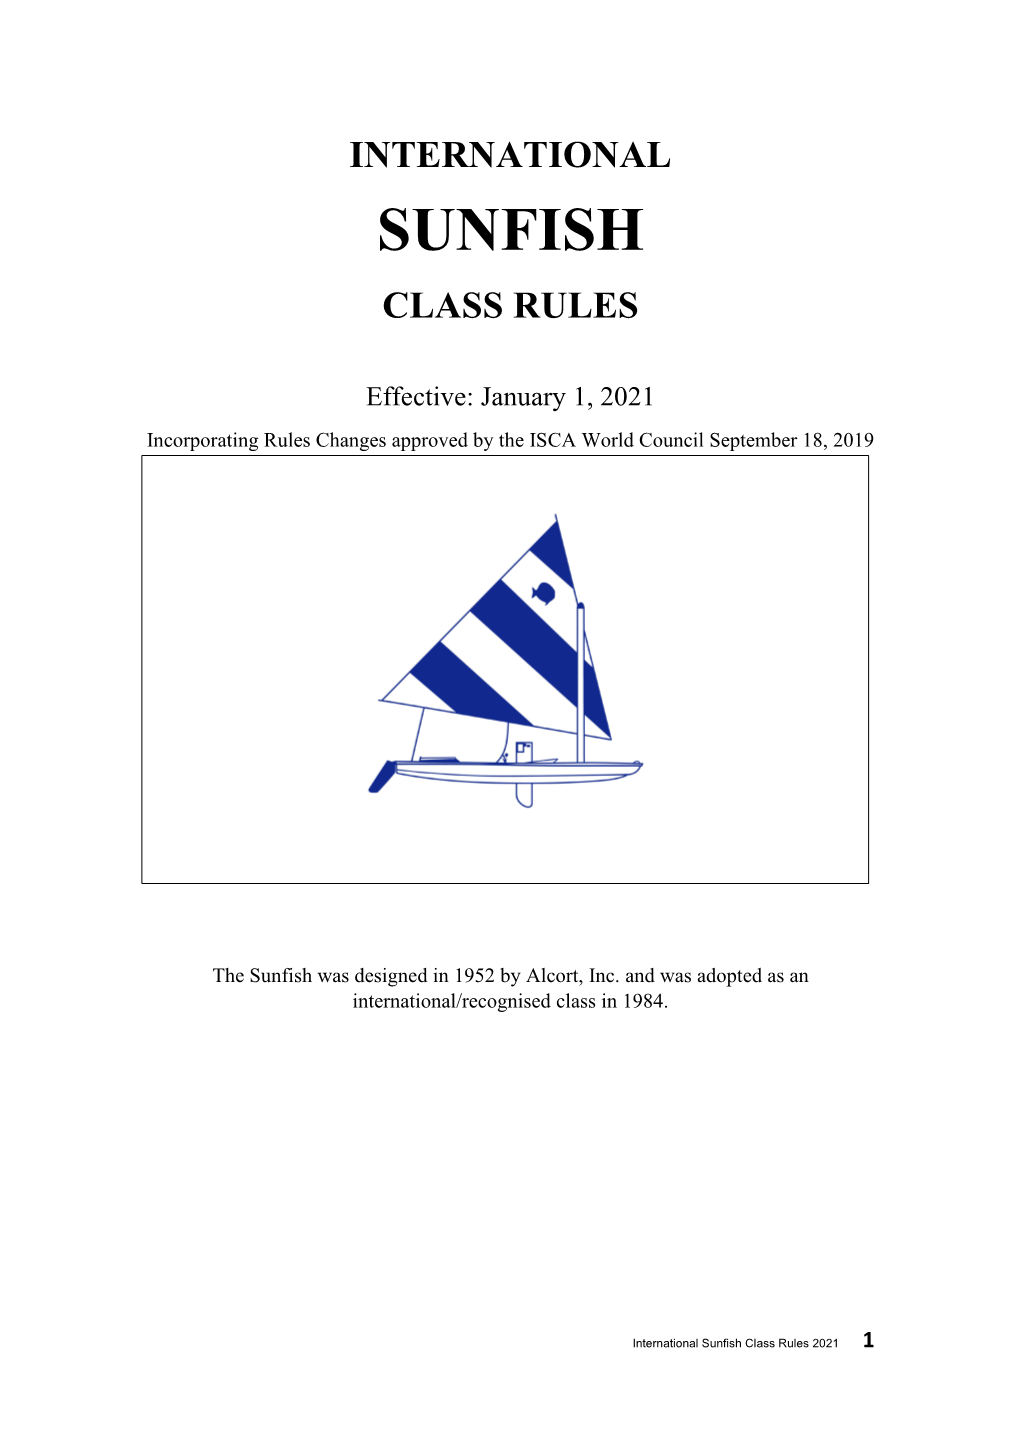 Sunfish Class Rules